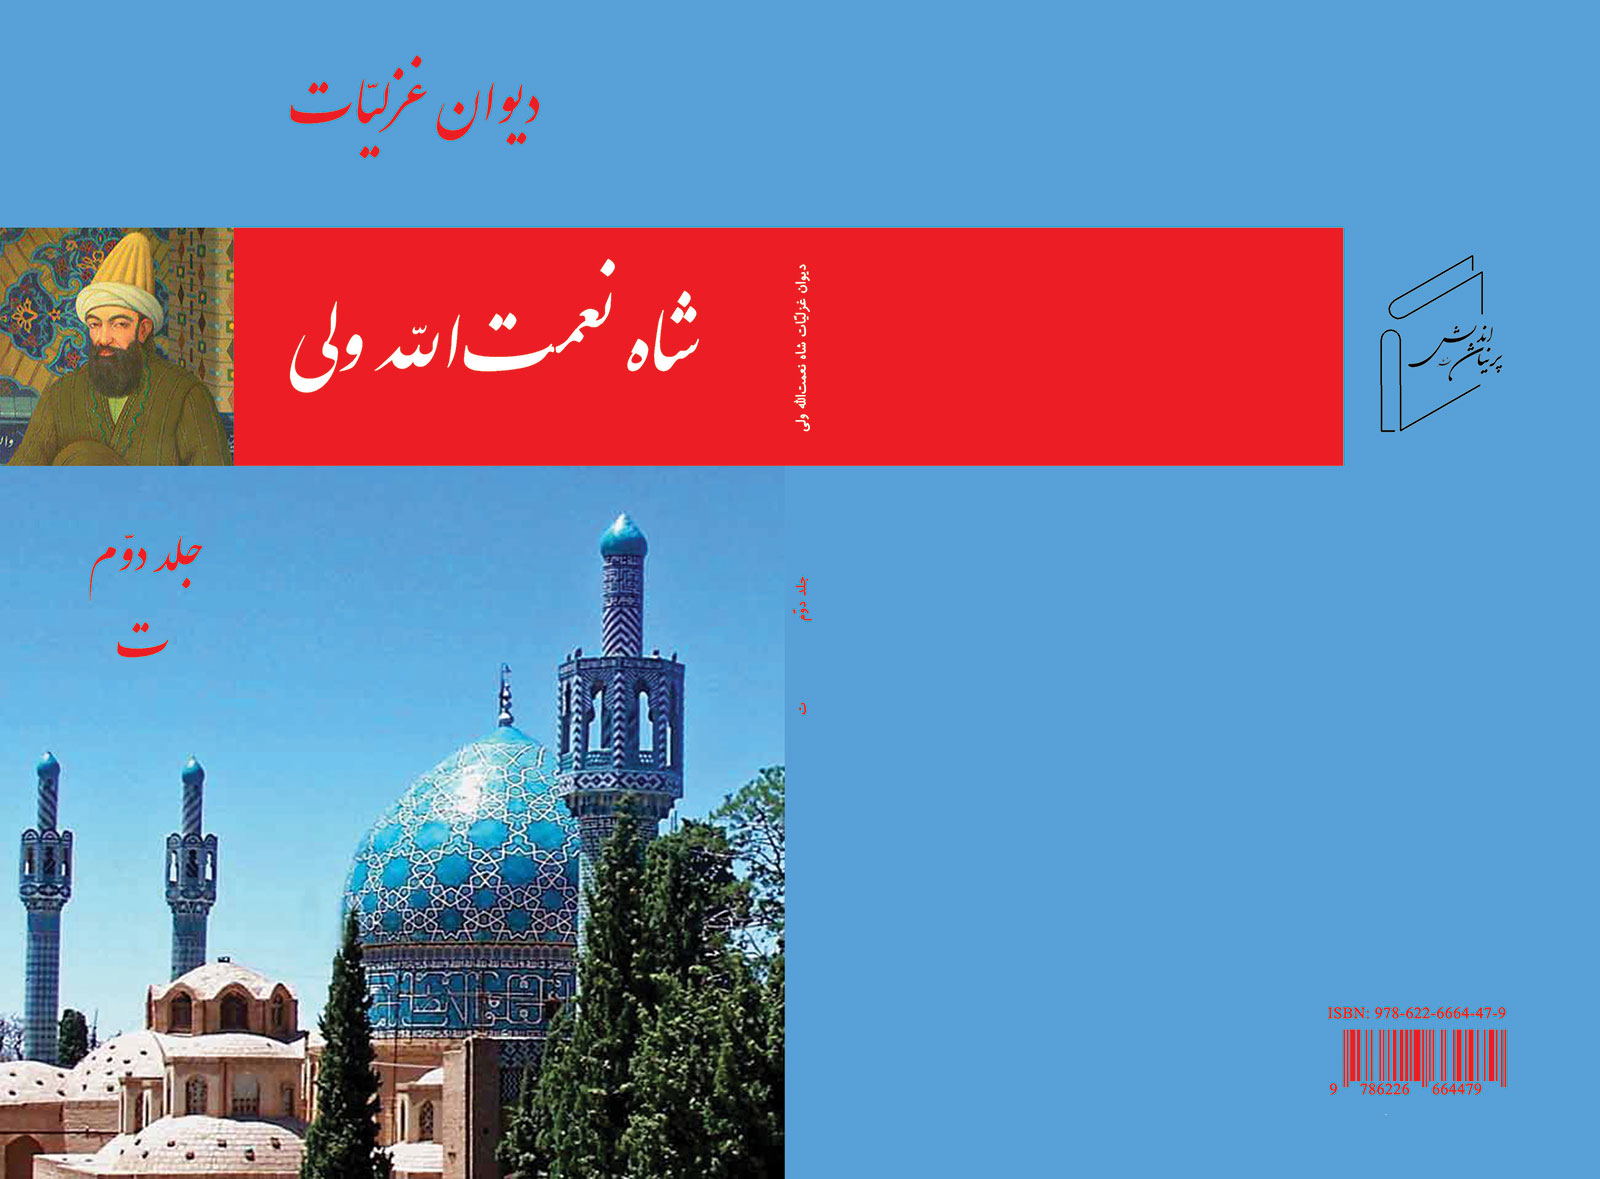 The Diwan of Shah Nematullah Vali, Ghazliat - Volume 2